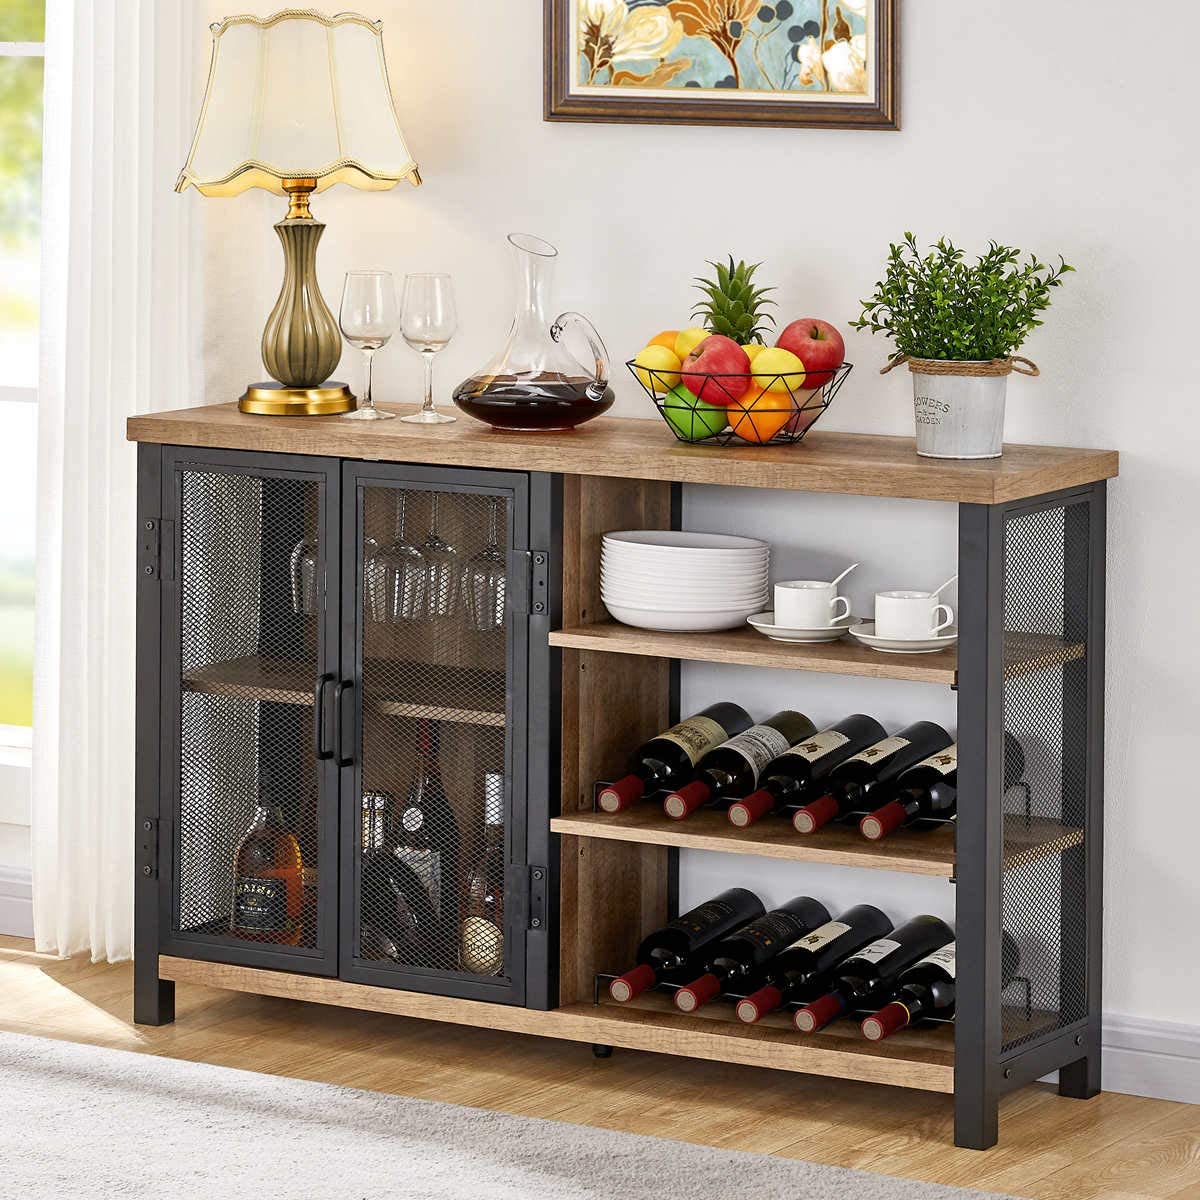 wine rack ideas - shelf